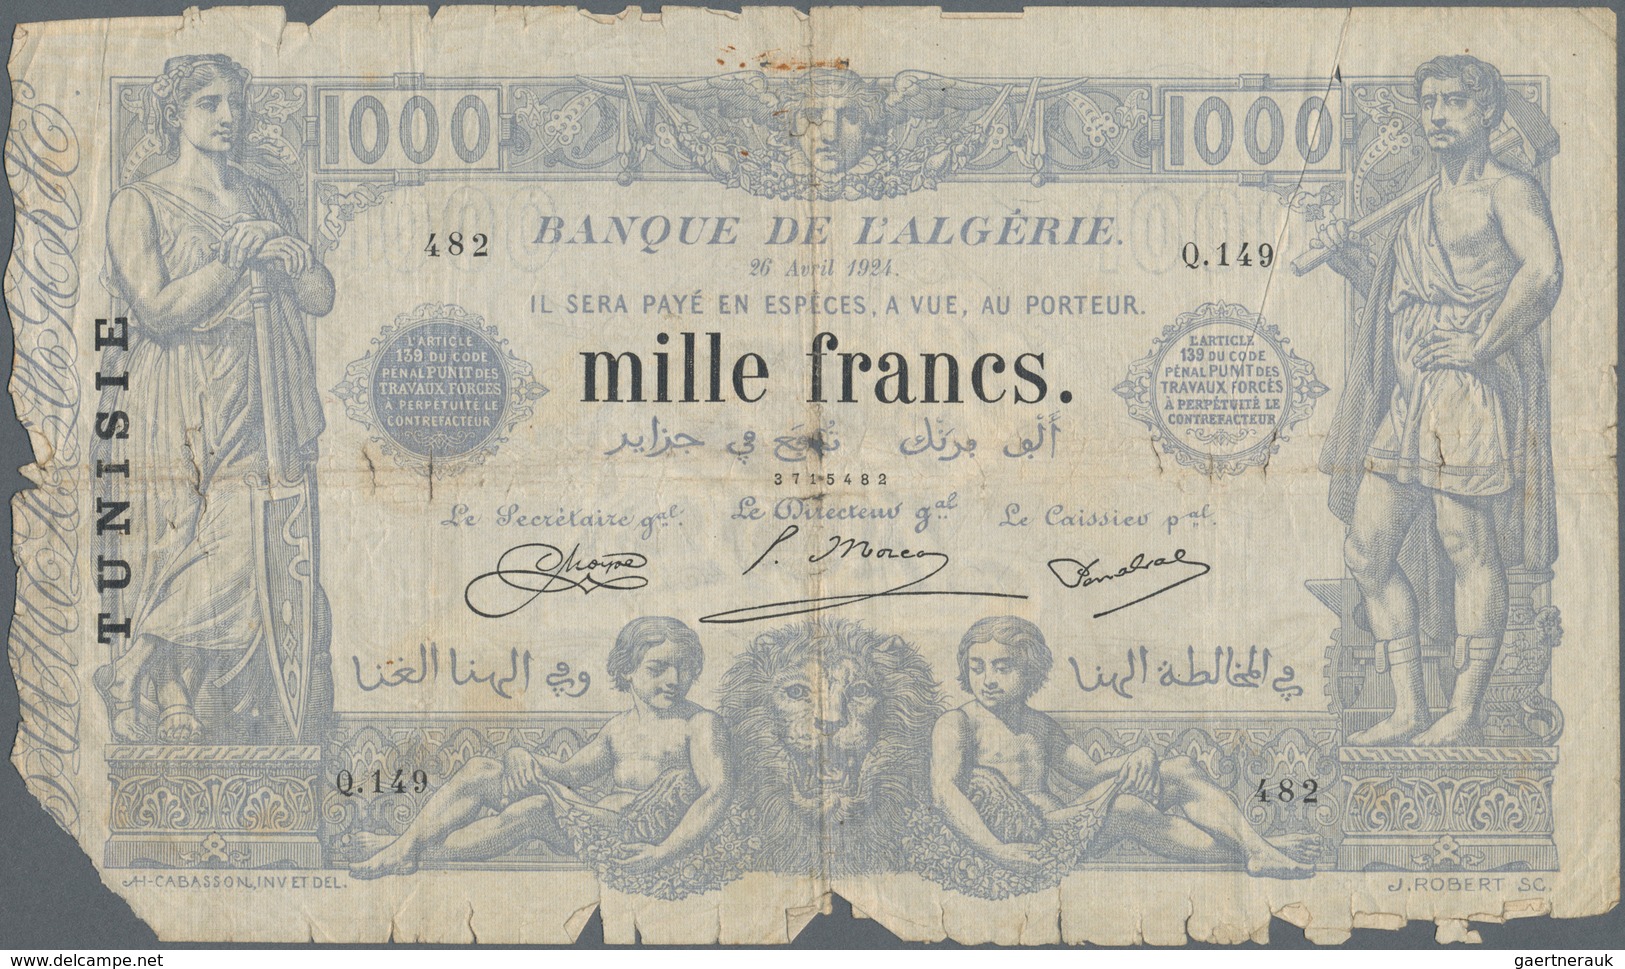 Tunisia / Tunisien: Banque De L'Algérie - TUNISIE 1000 Francs 1924, P.7b, Almost Well Worn Condition - Tunisia